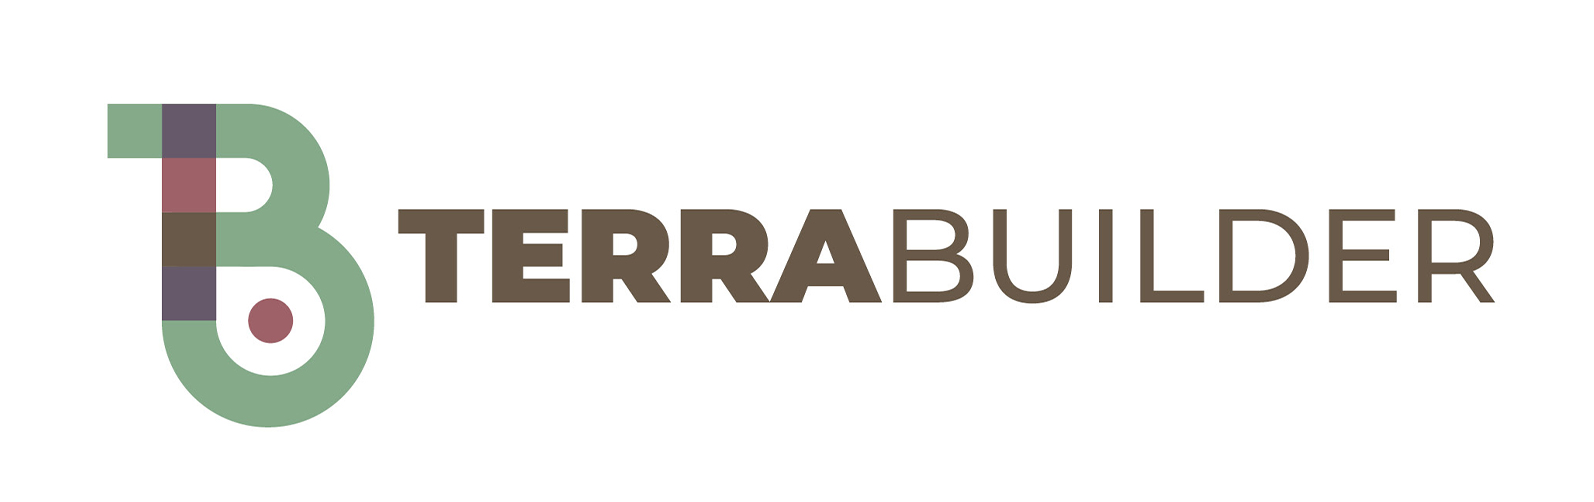 Terrabuilder